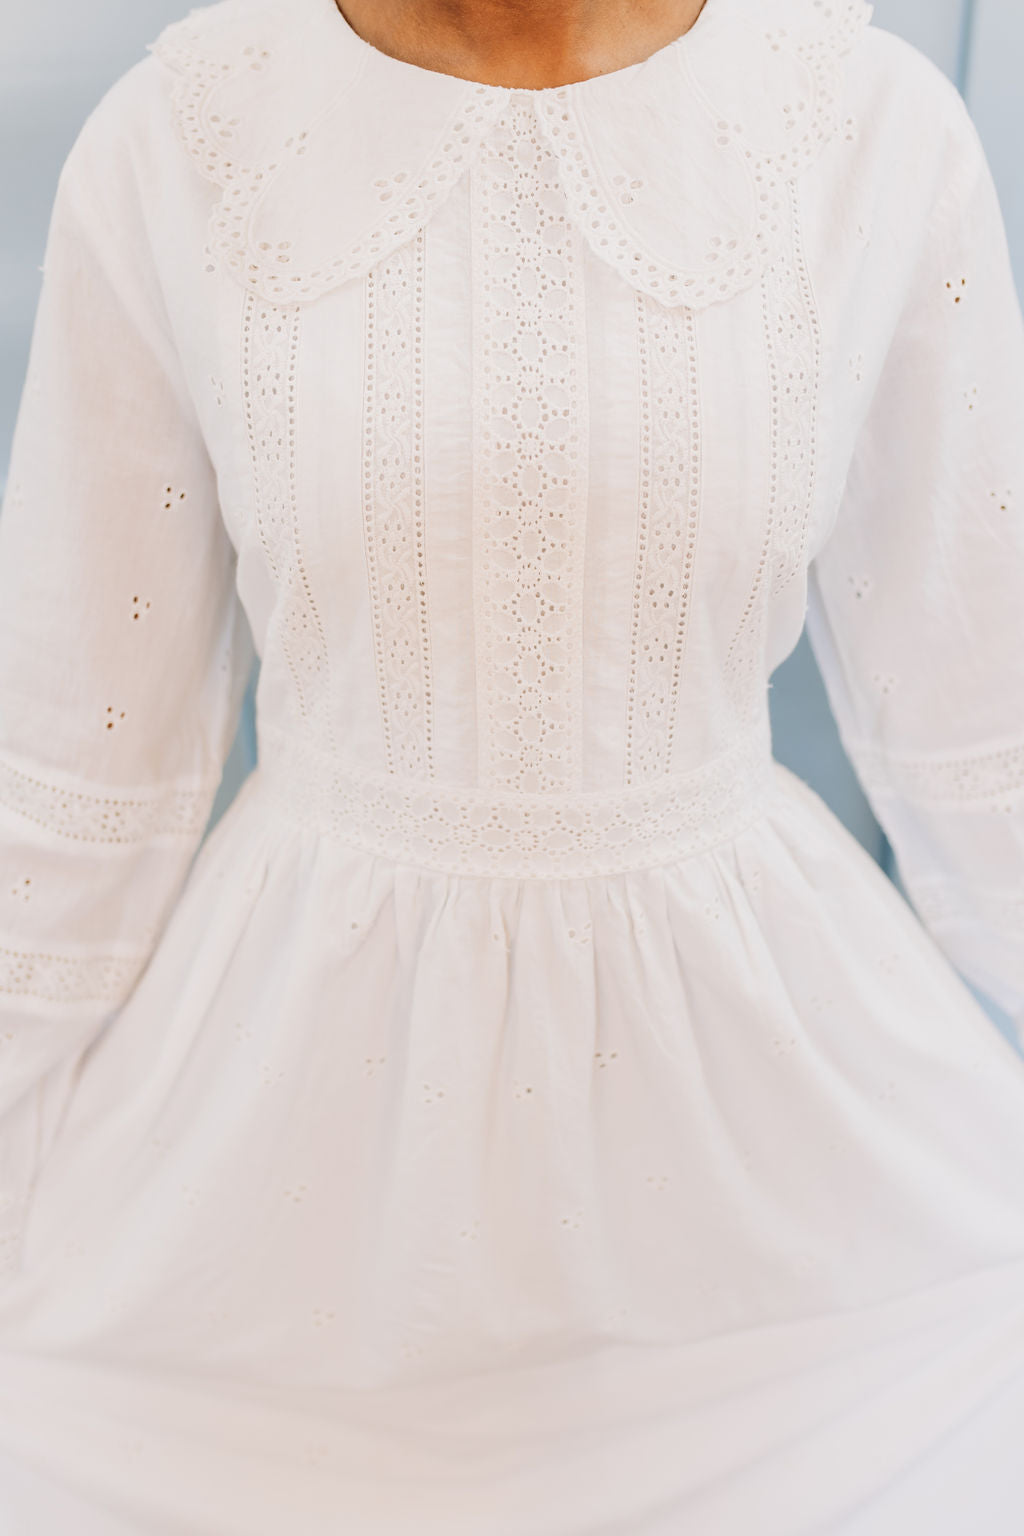 Emma Cotton Dress